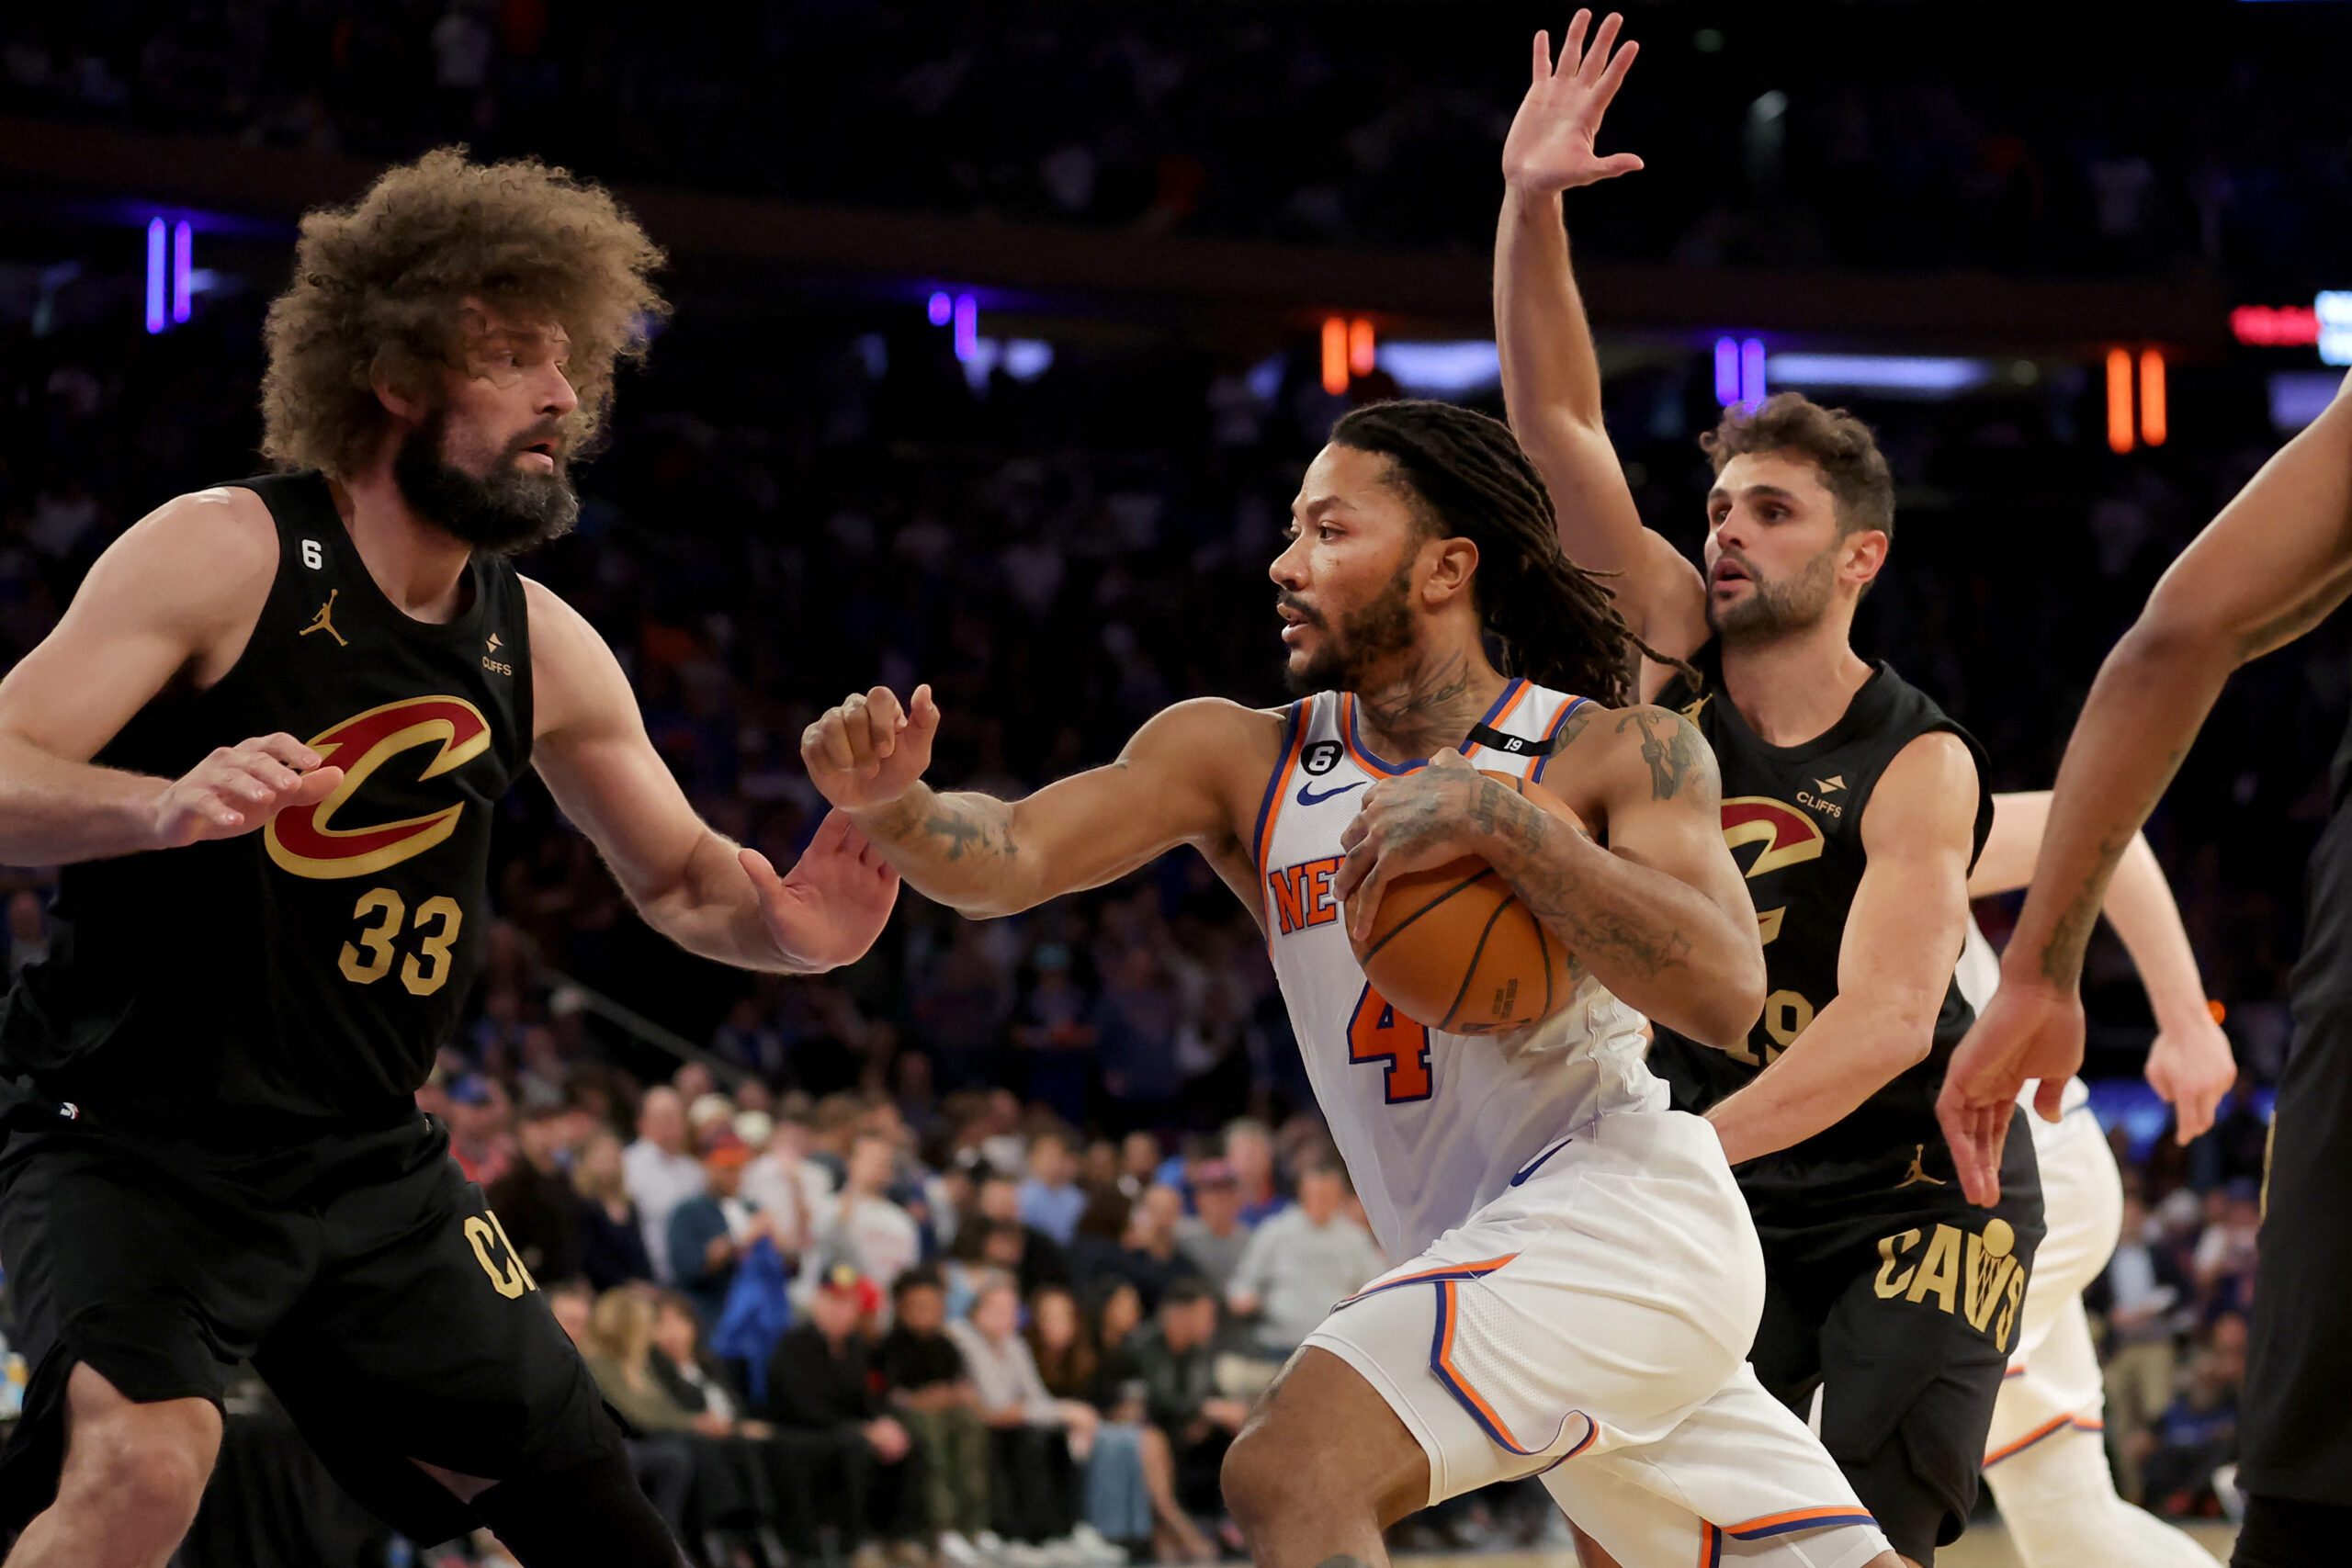 Knicks move closer to playoffs behind Brunson's 48 vs. Cavs